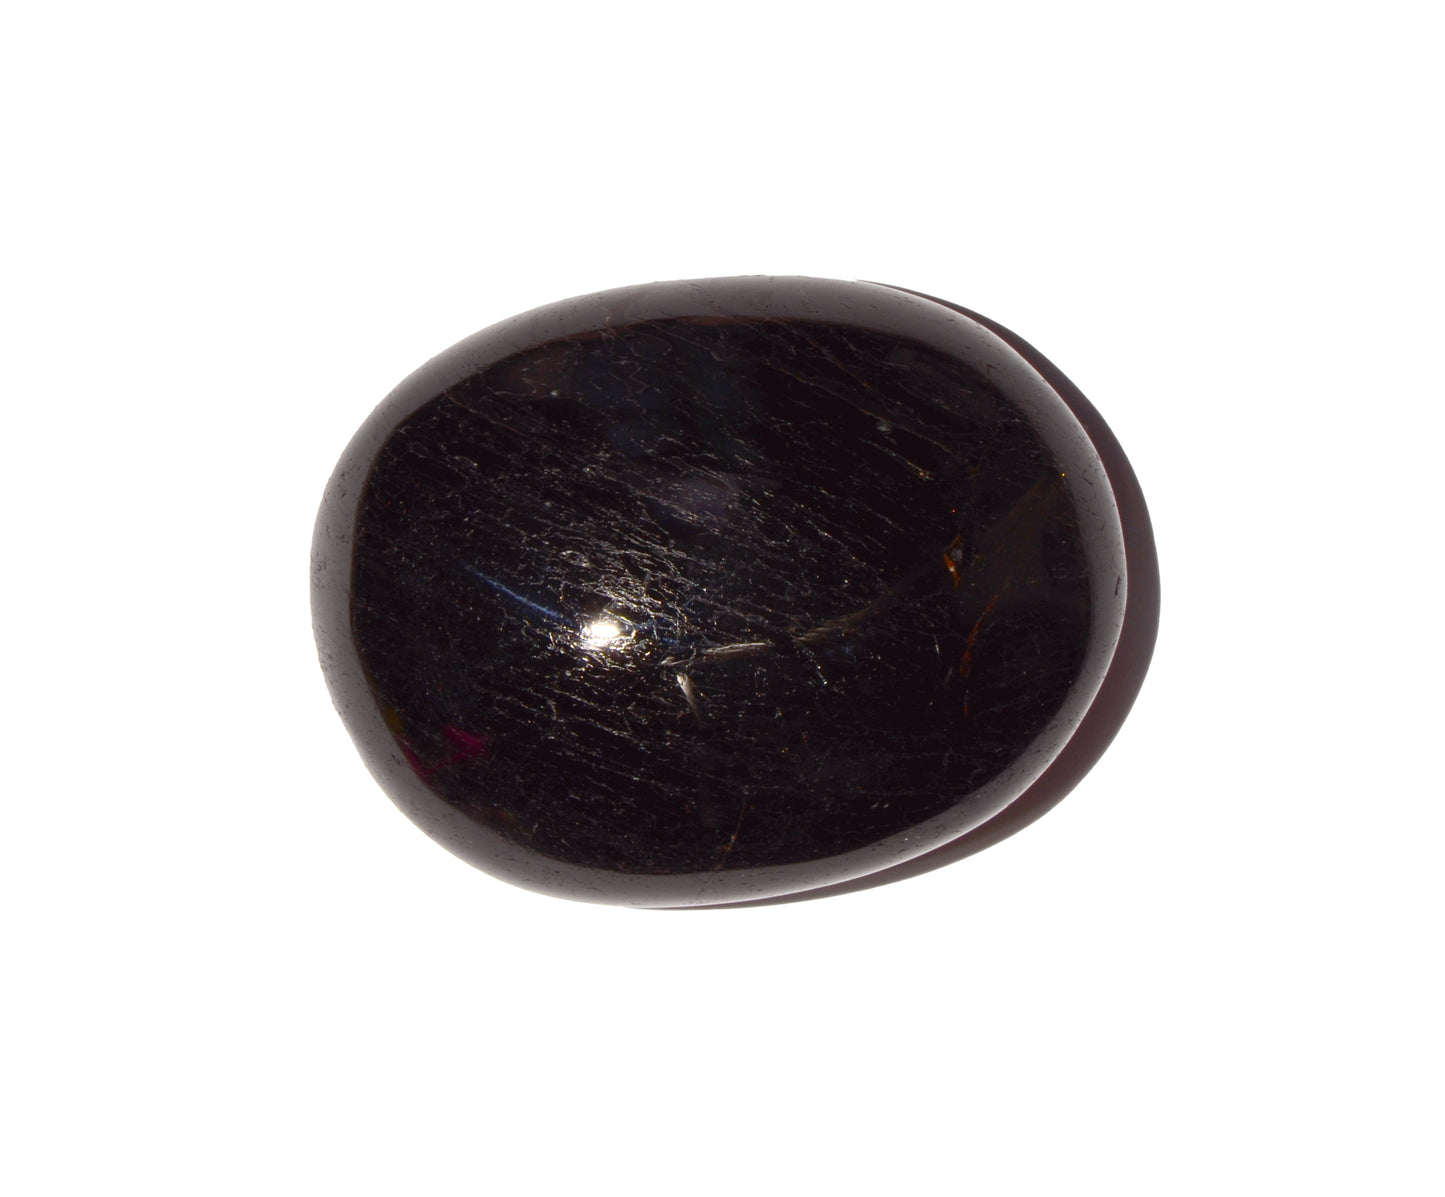 healing crystals: black tourmaline palm stone - polished